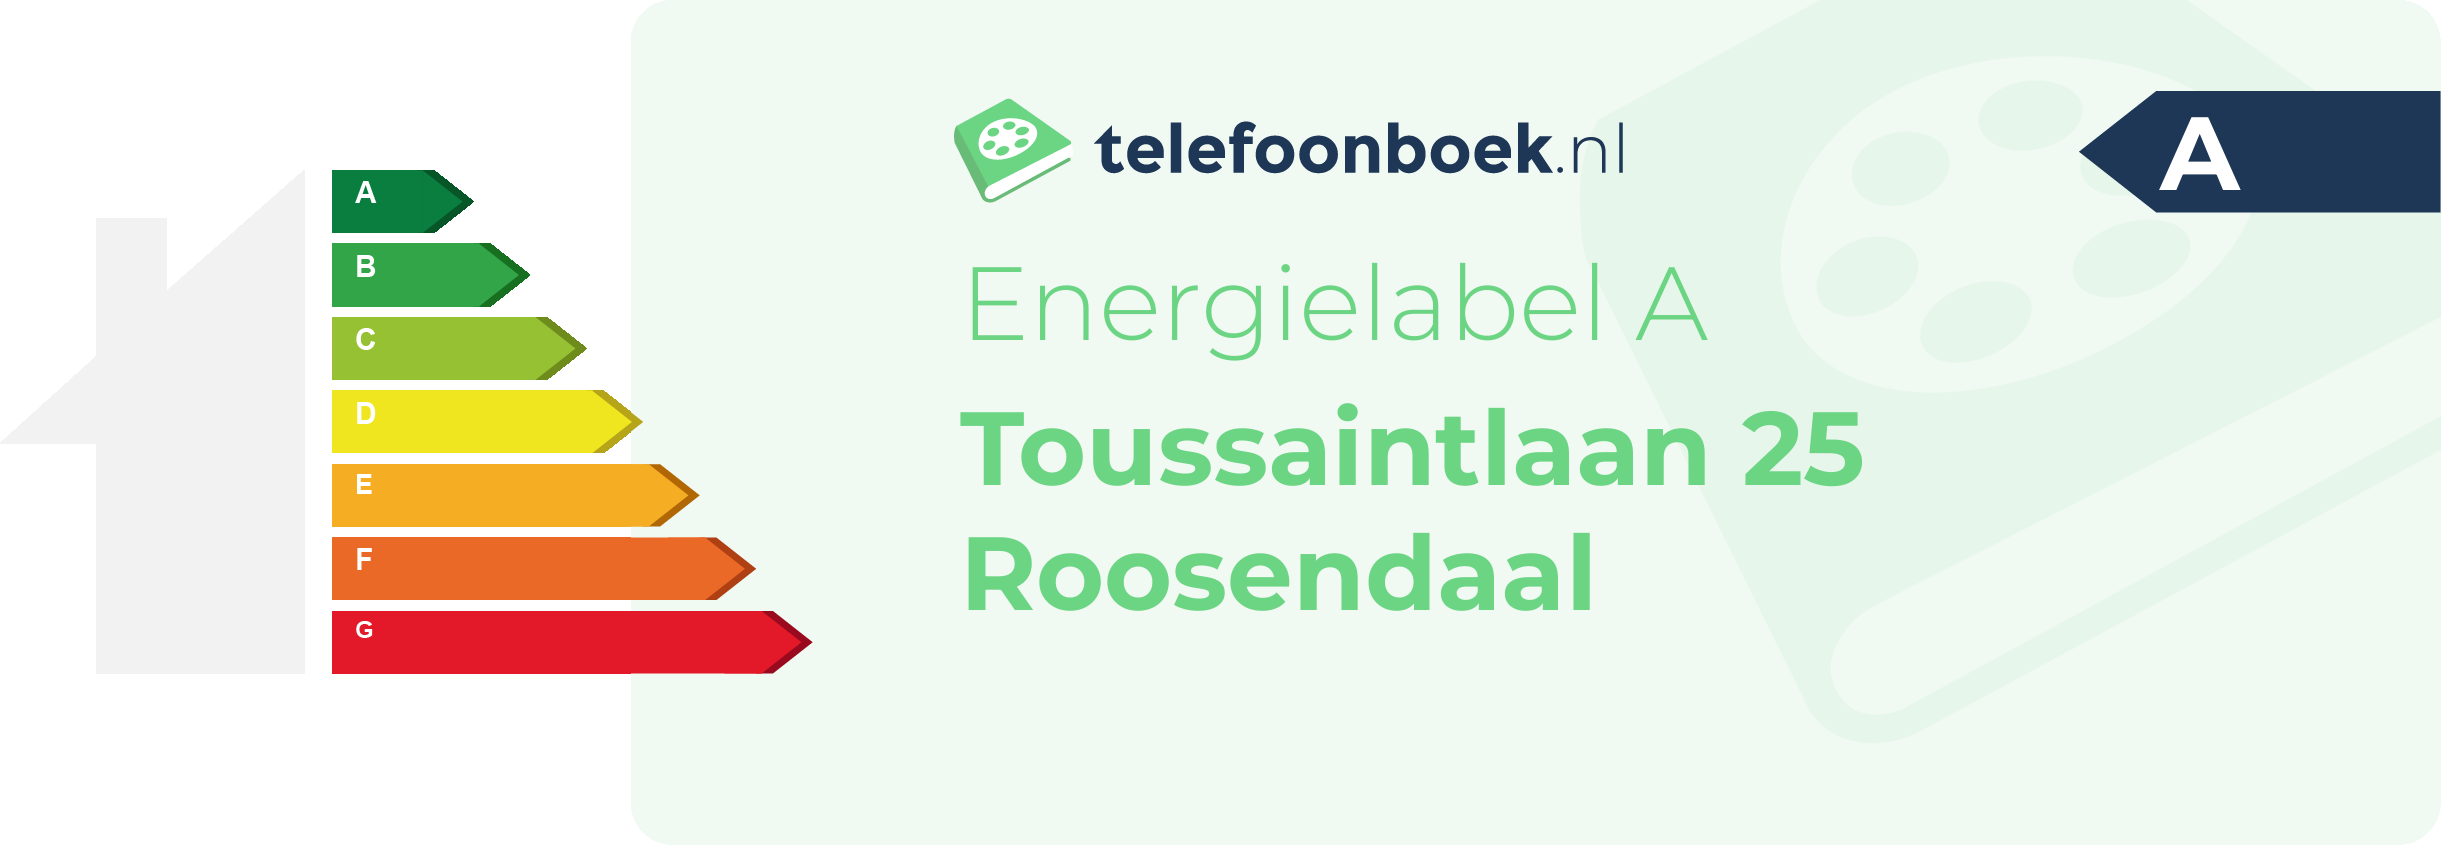 Energielabel Toussaintlaan 25 Roosendaal